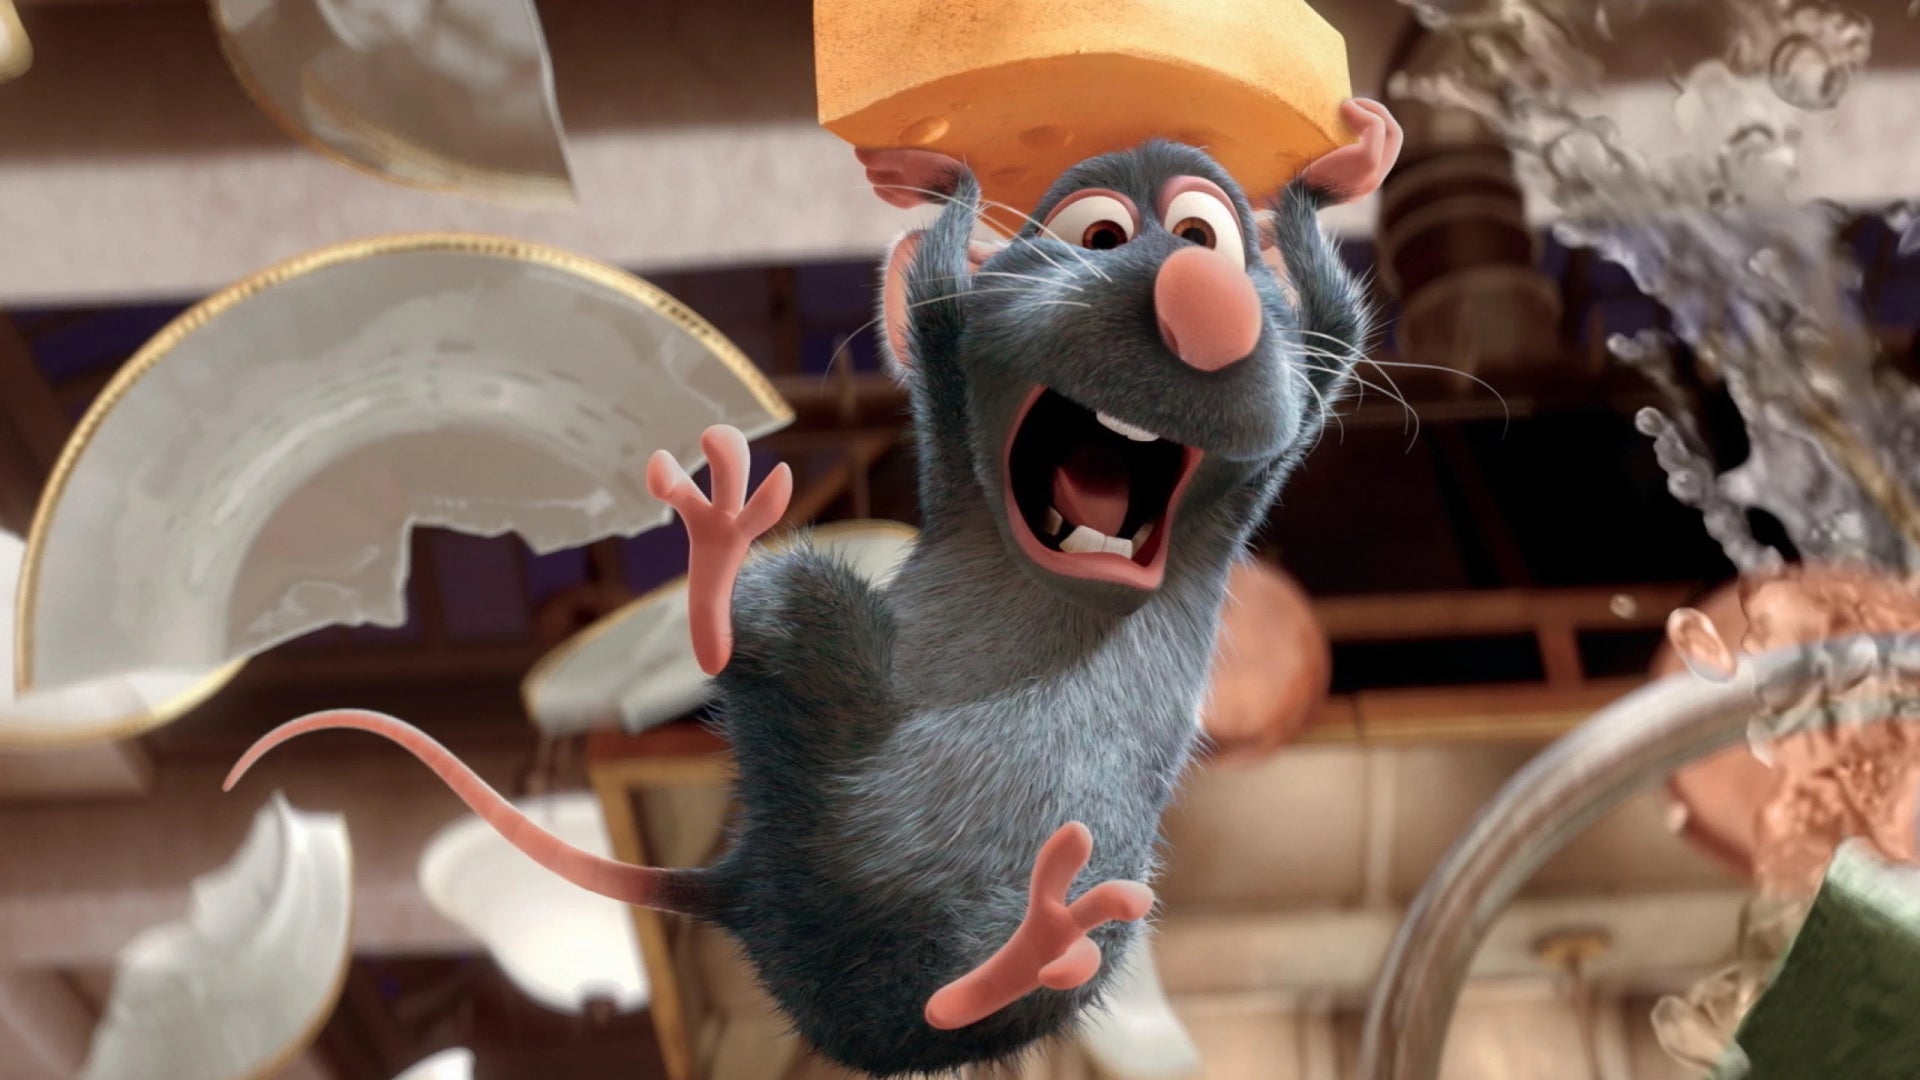 Disney Pixar's Ratatouille - Limited Edition SteelBook